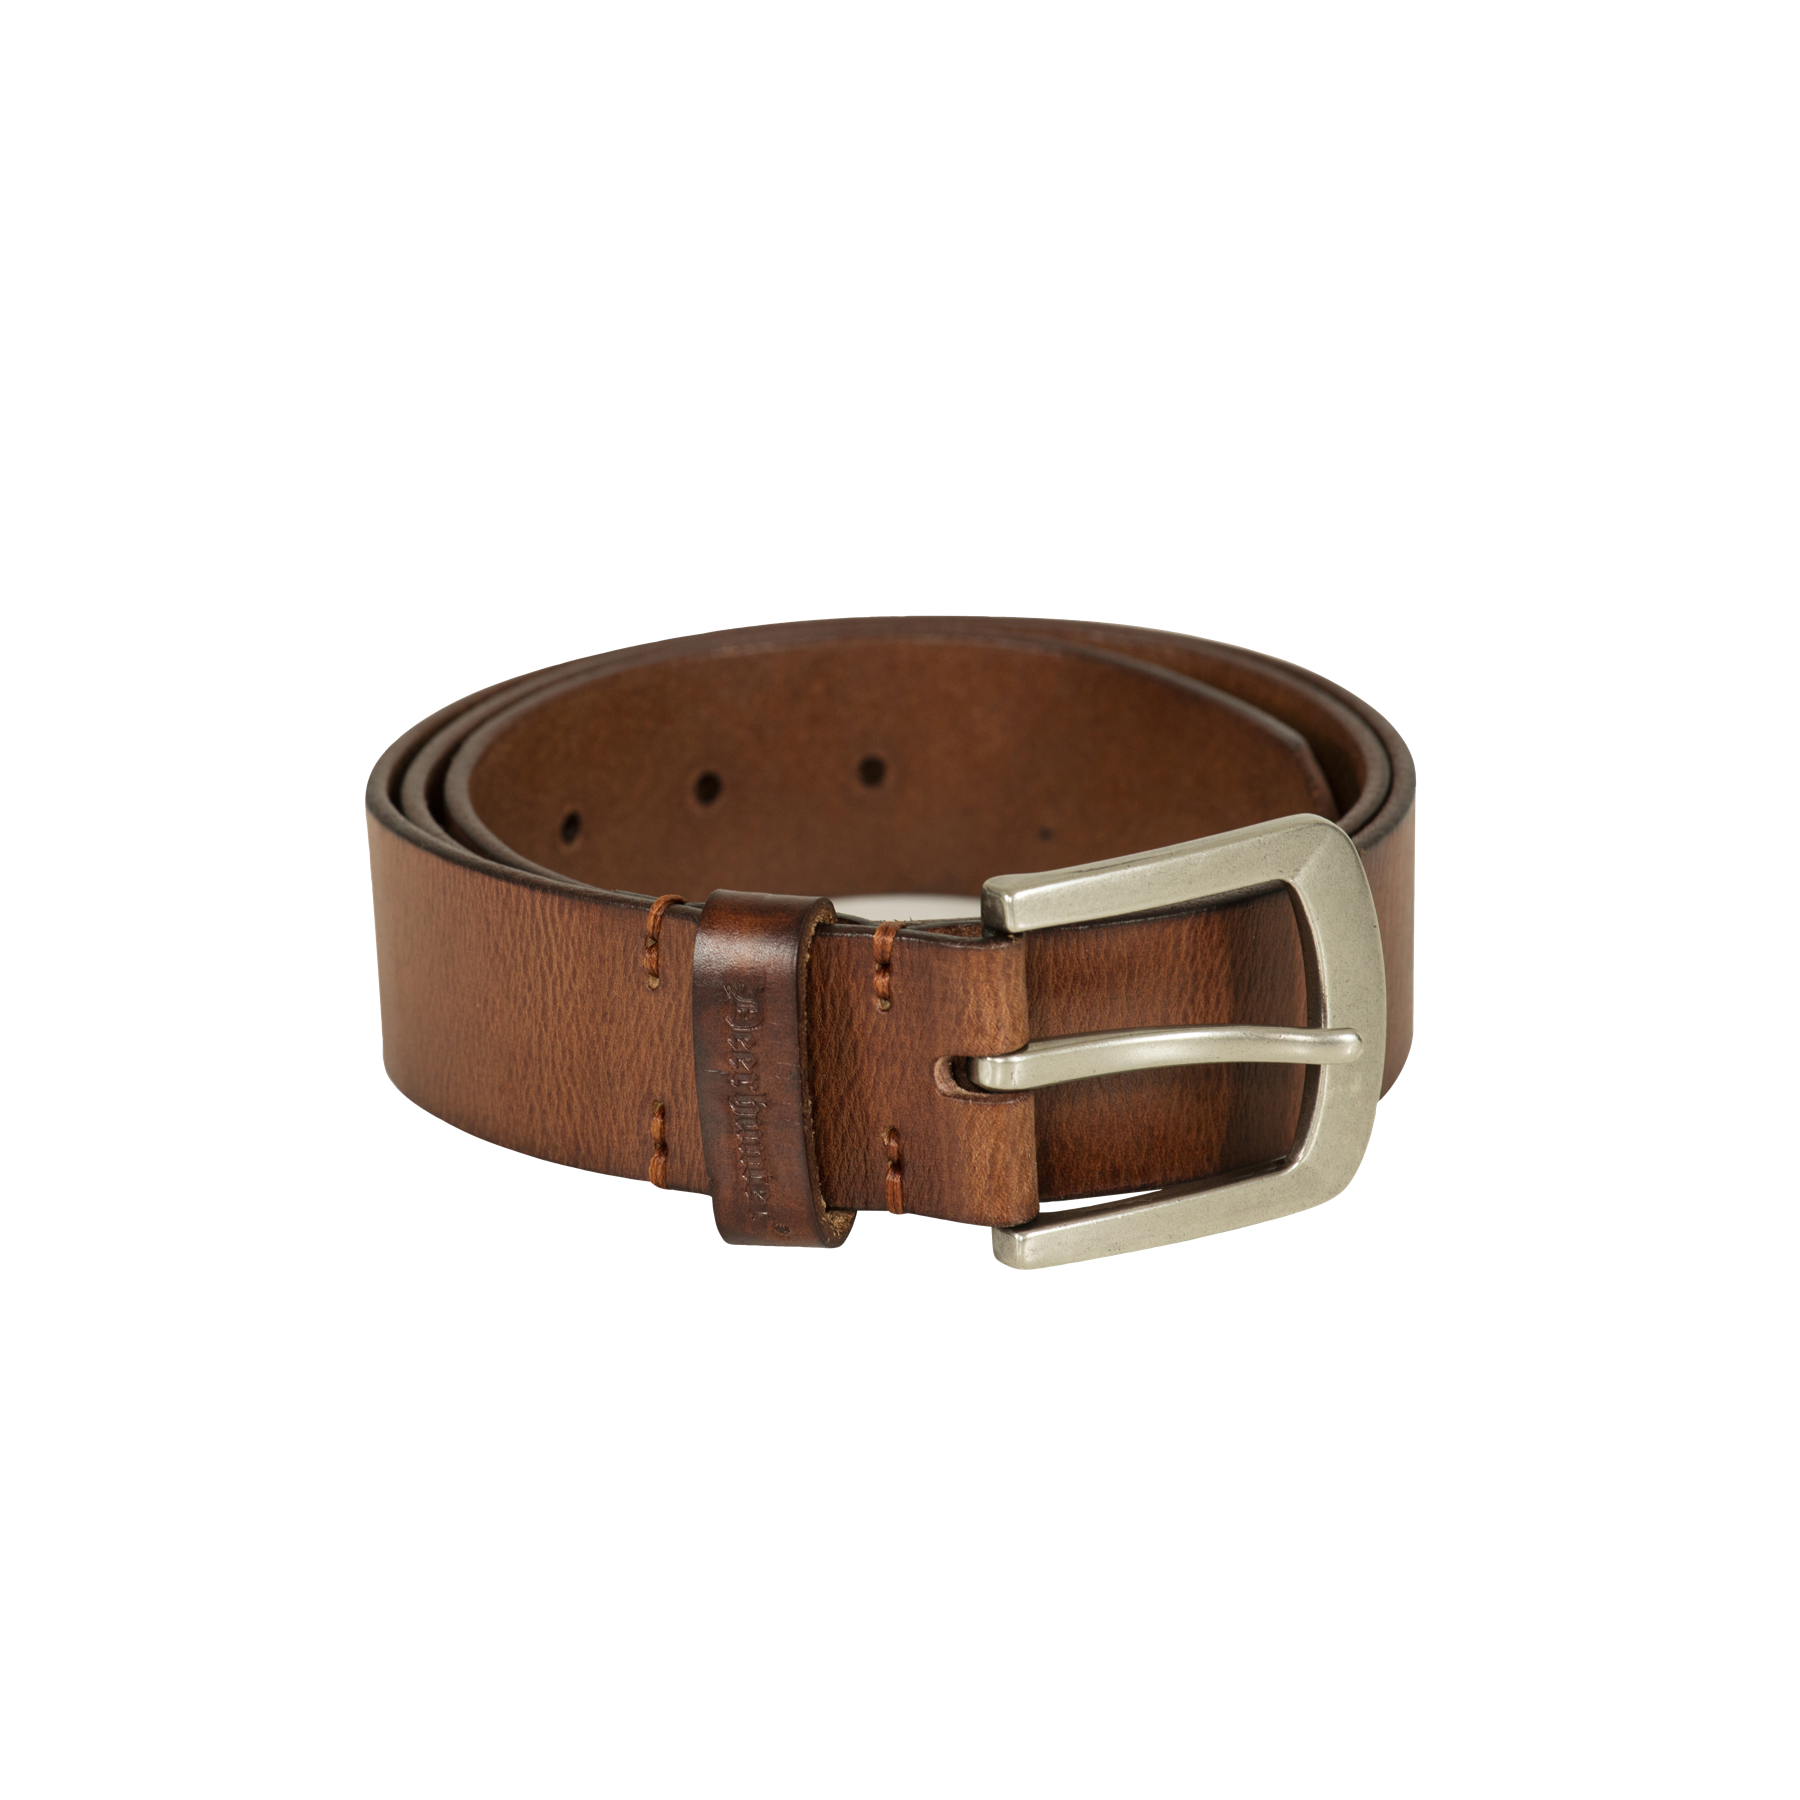 Leather Belt, width 4 cm